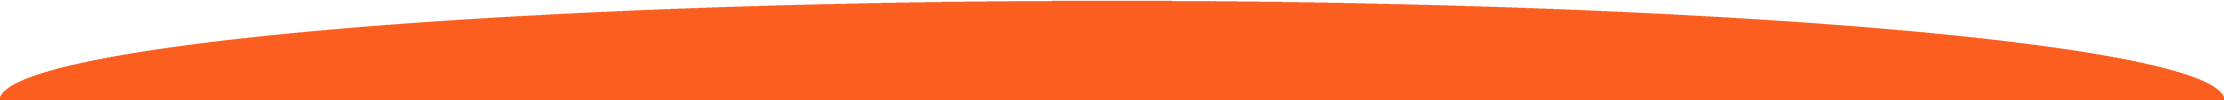 orangeBottom